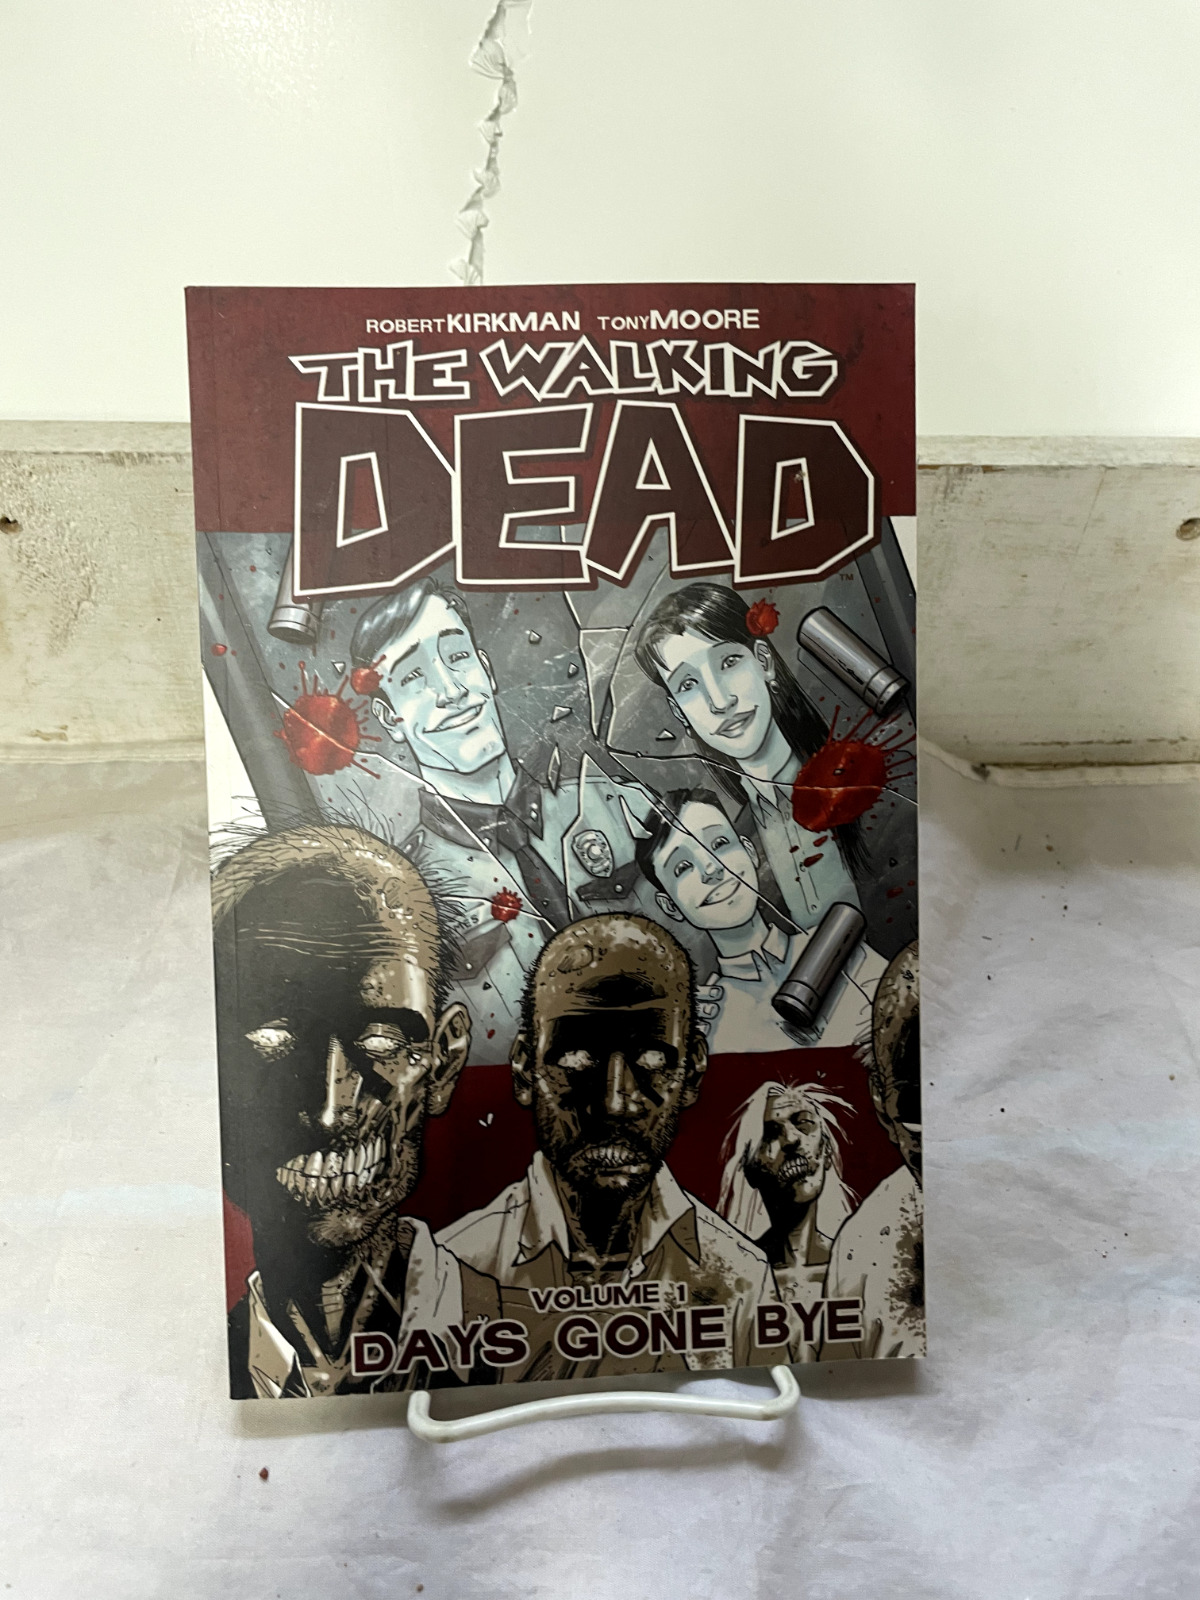 The Walking Dead #1 (Image Comics, May 2004)